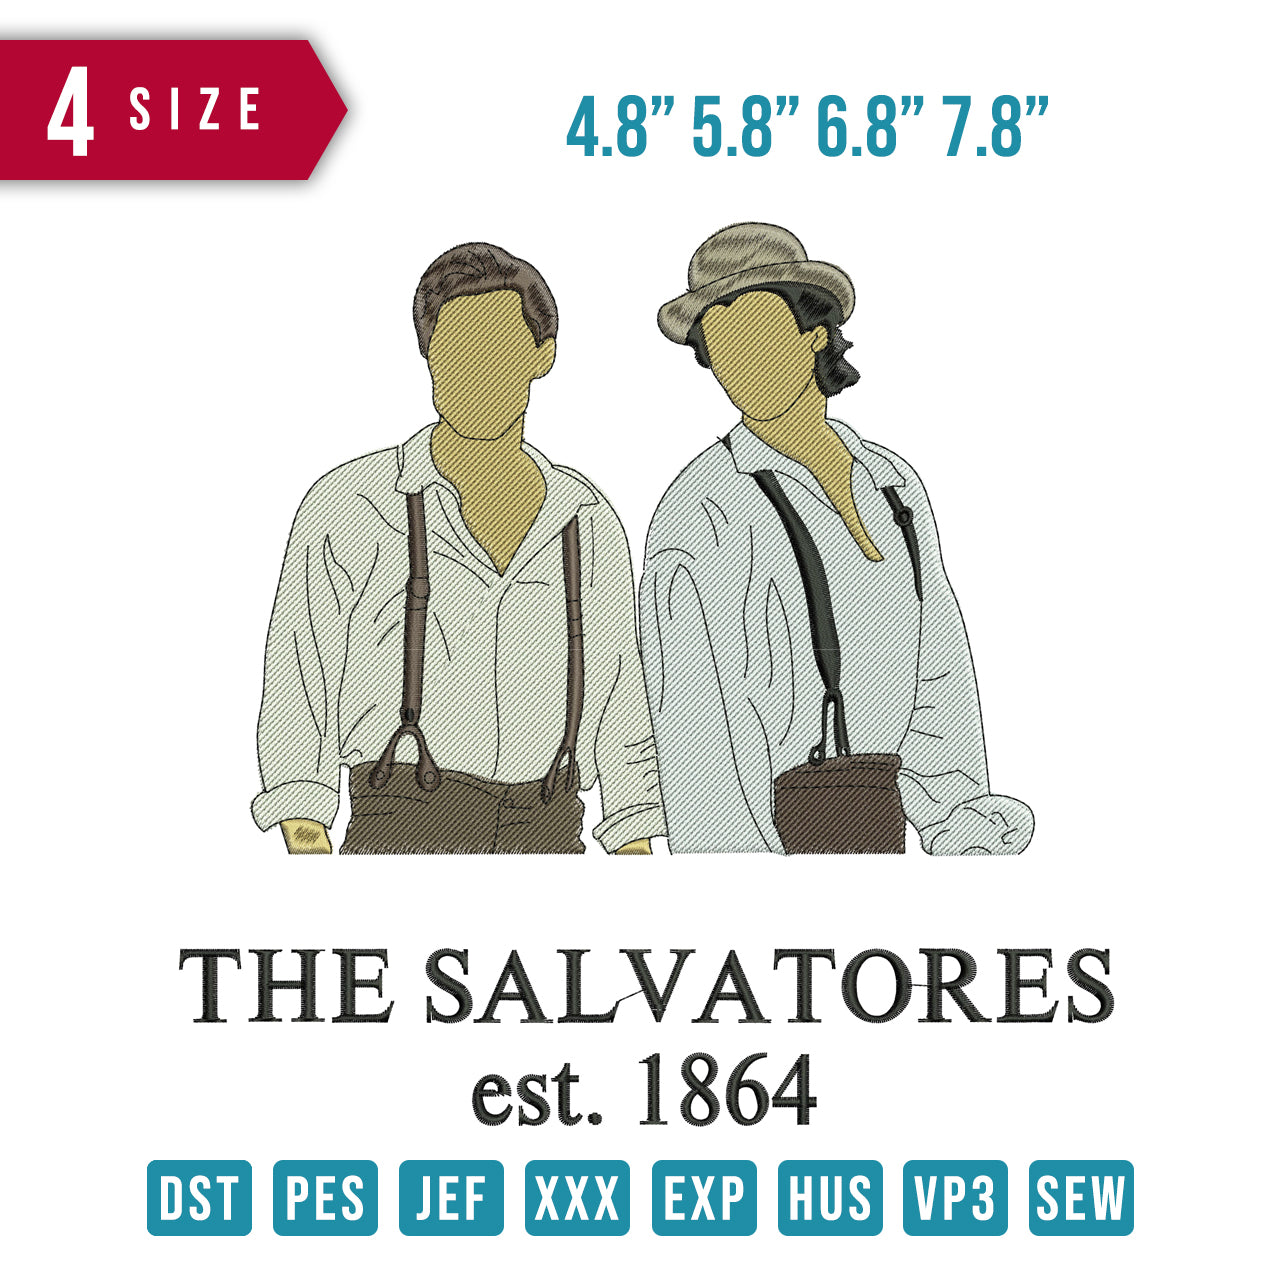 The Salvator